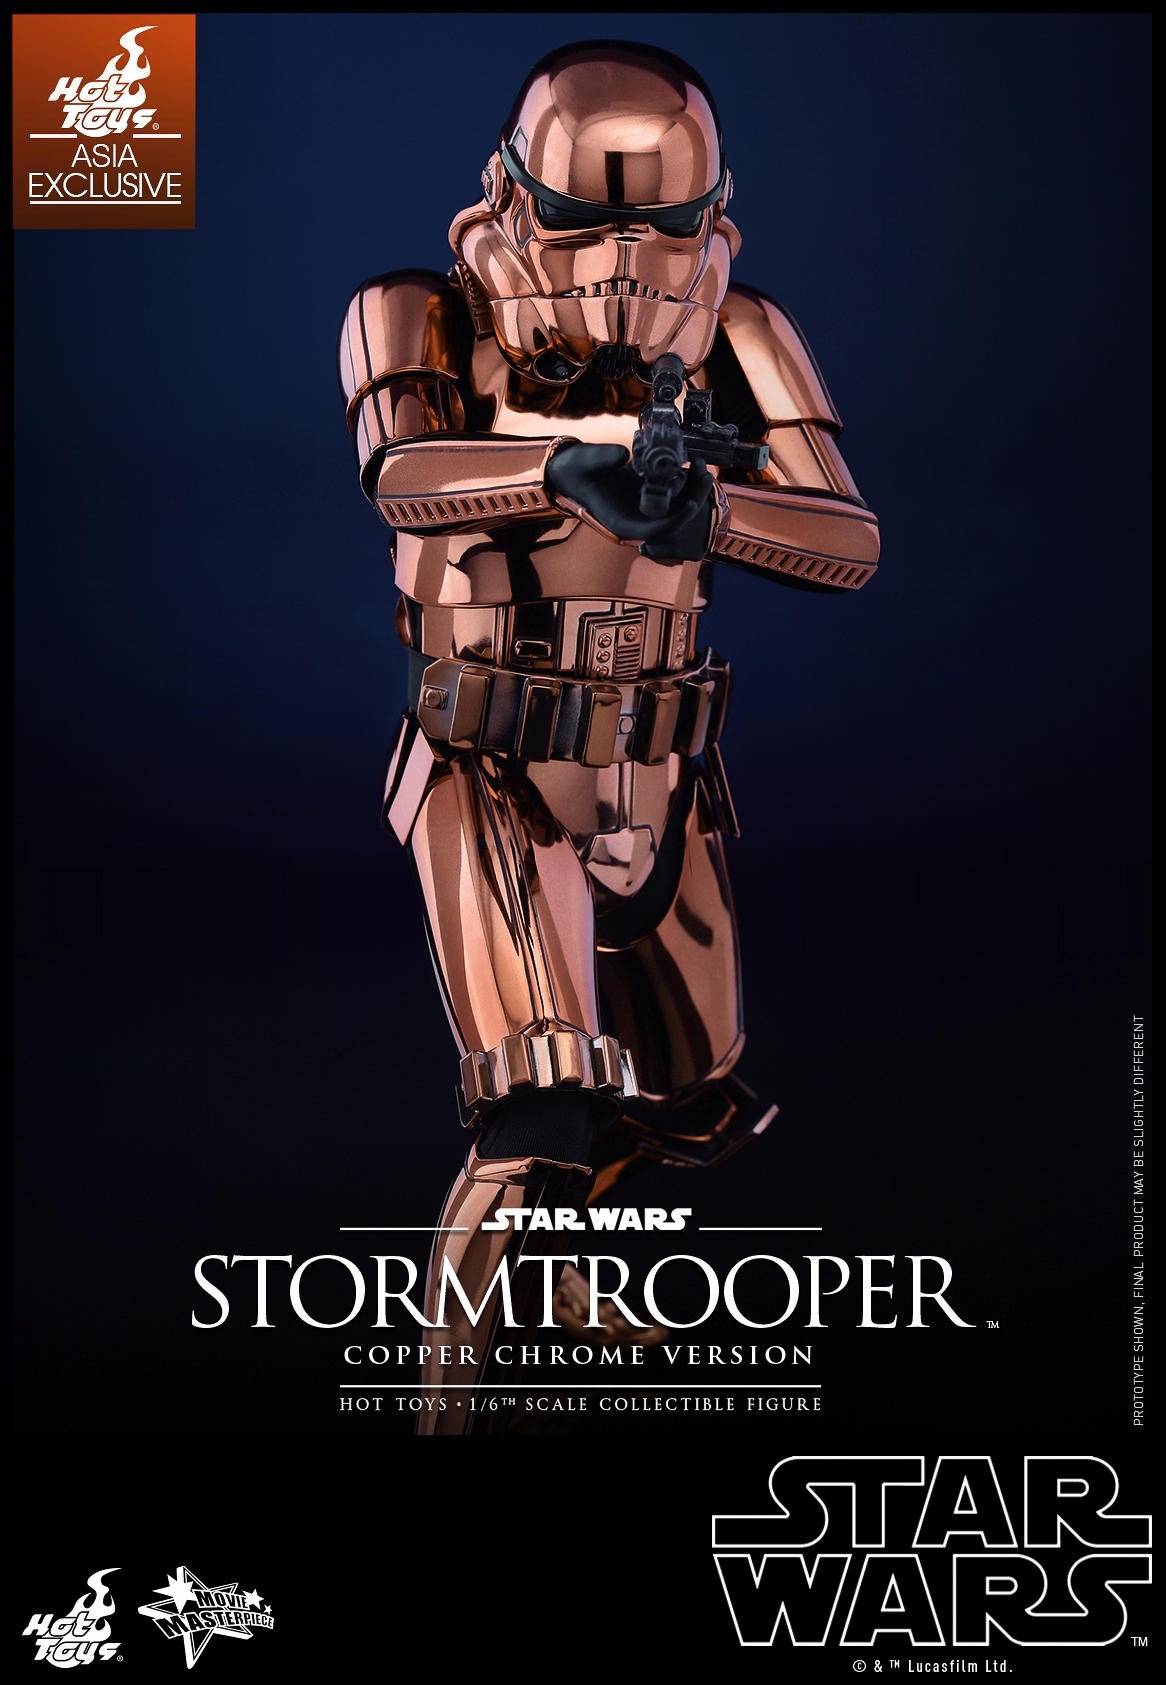 Hot-Toys-Stormtrooper-Copper-Chrome-Version-MMS330-001.jpg